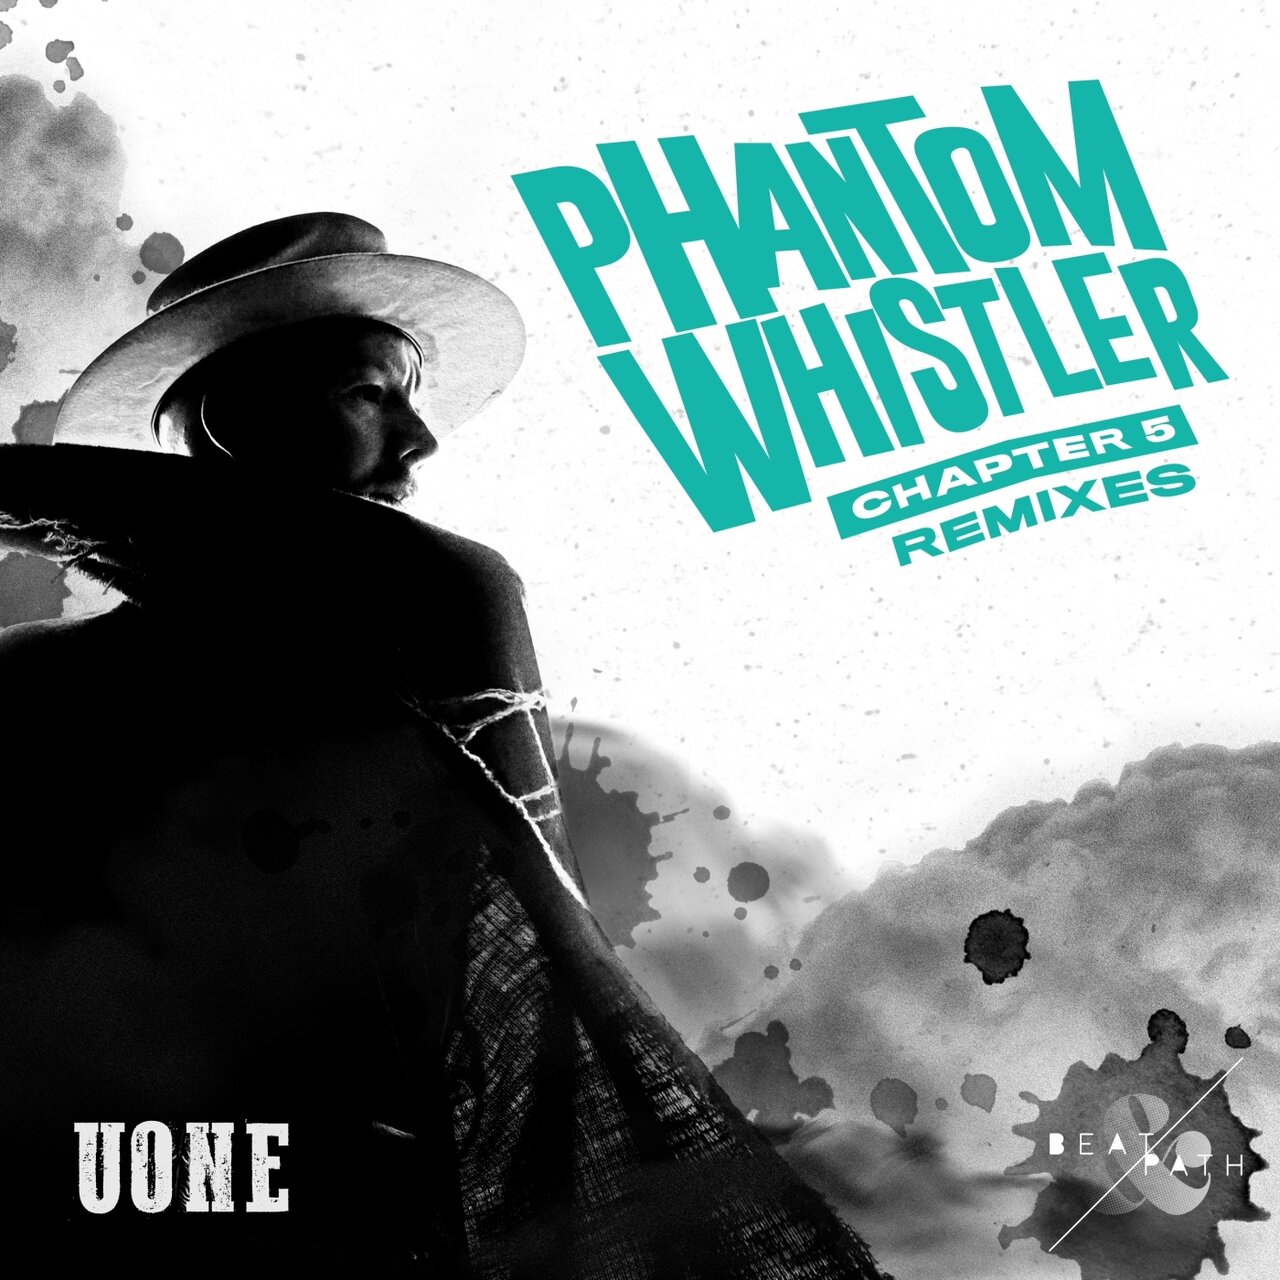 image cover: Uone - Phantom Whistler - Chapter 5 on